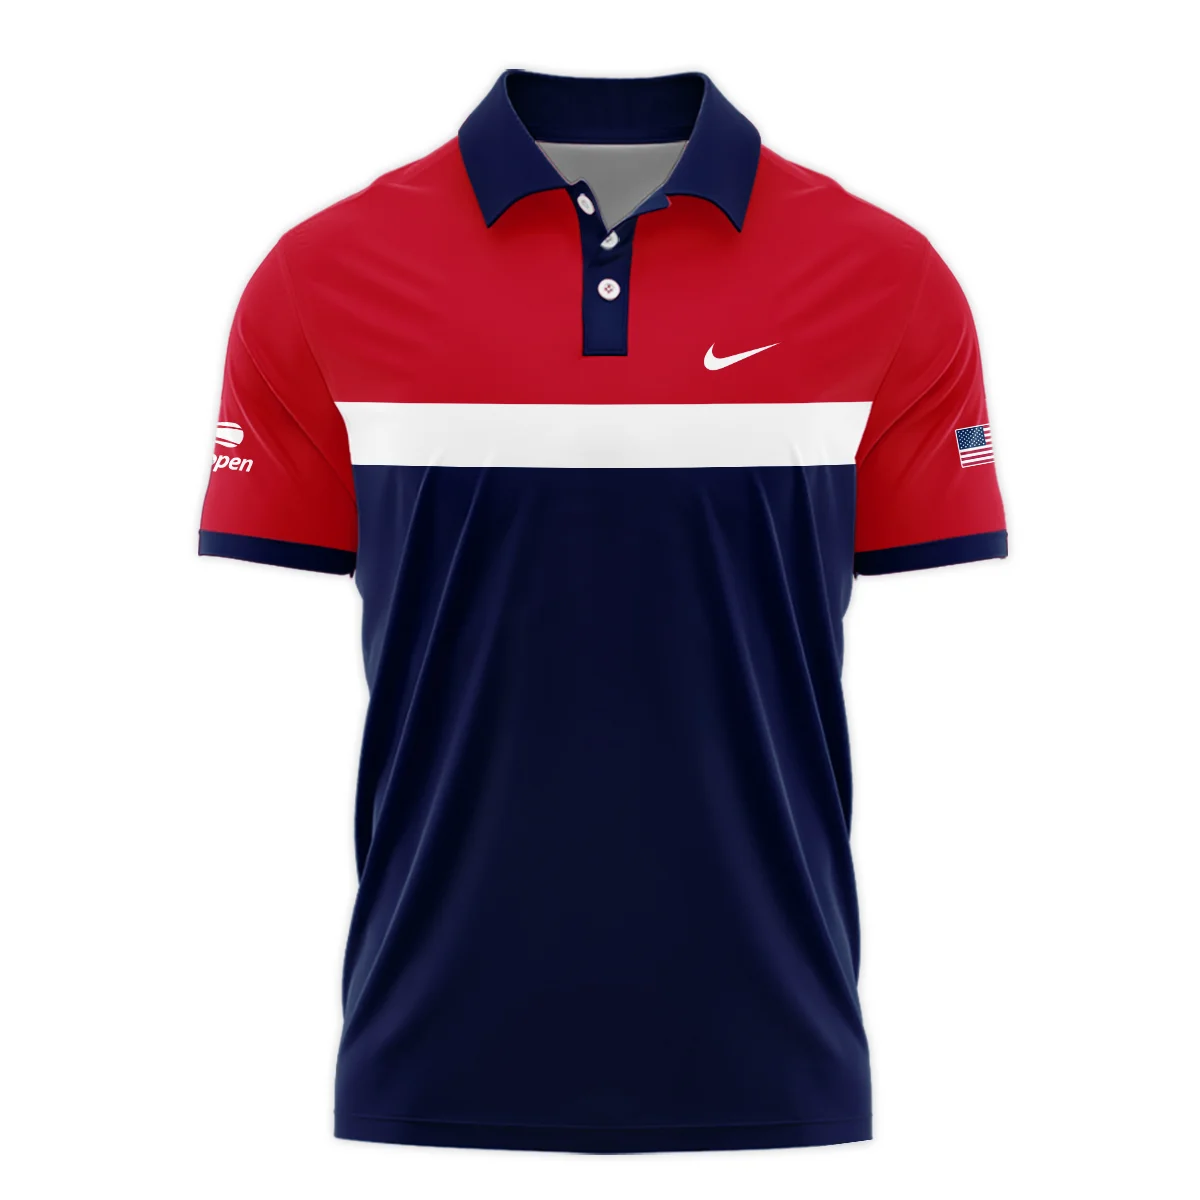 Nike Blue Red White Background US Open Tennis Champions Mandarin collar Quater-Zip Long Sleeve